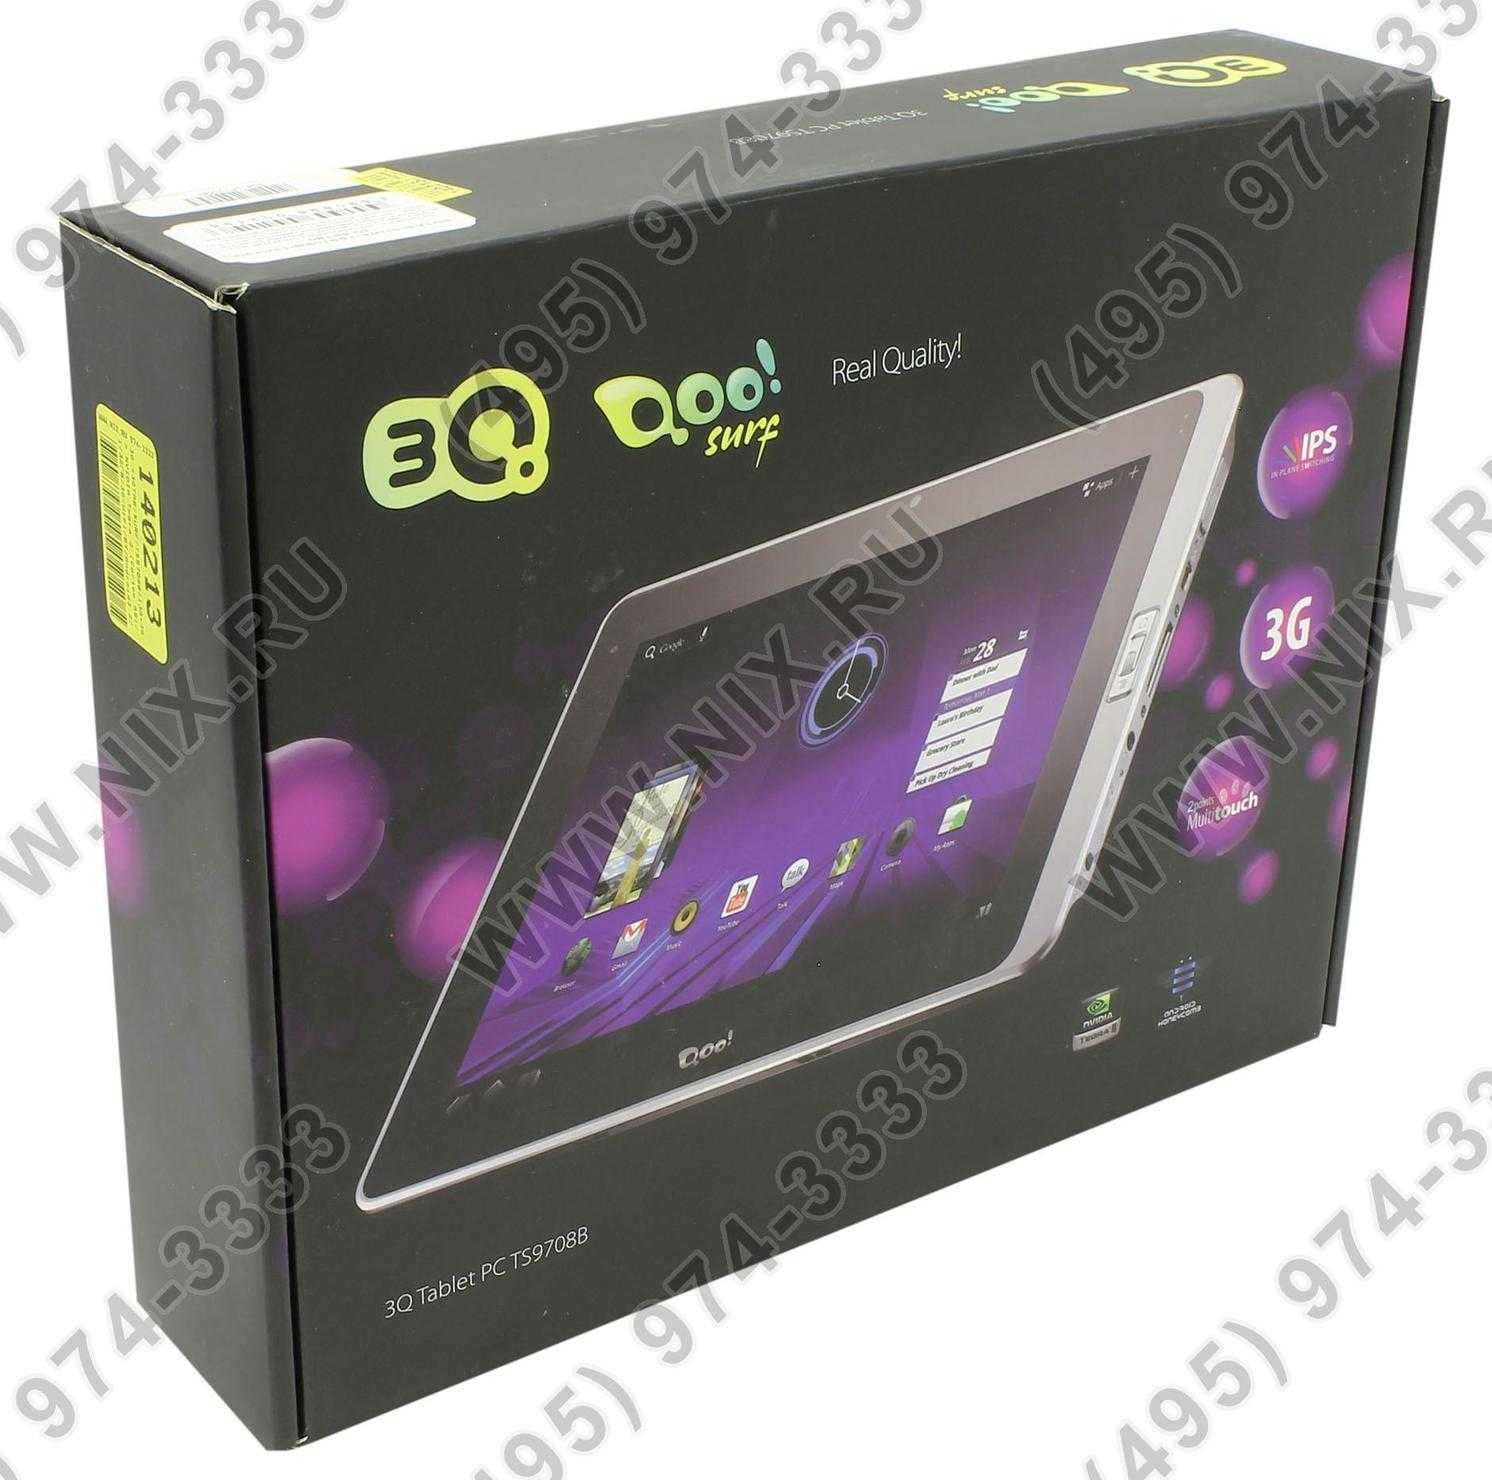 3q qoo surf tablet pc ts1003t 512mb ddr2 8gb ssd - купить , скидки, цена, отзывы, обзор, характеристики - планшеты